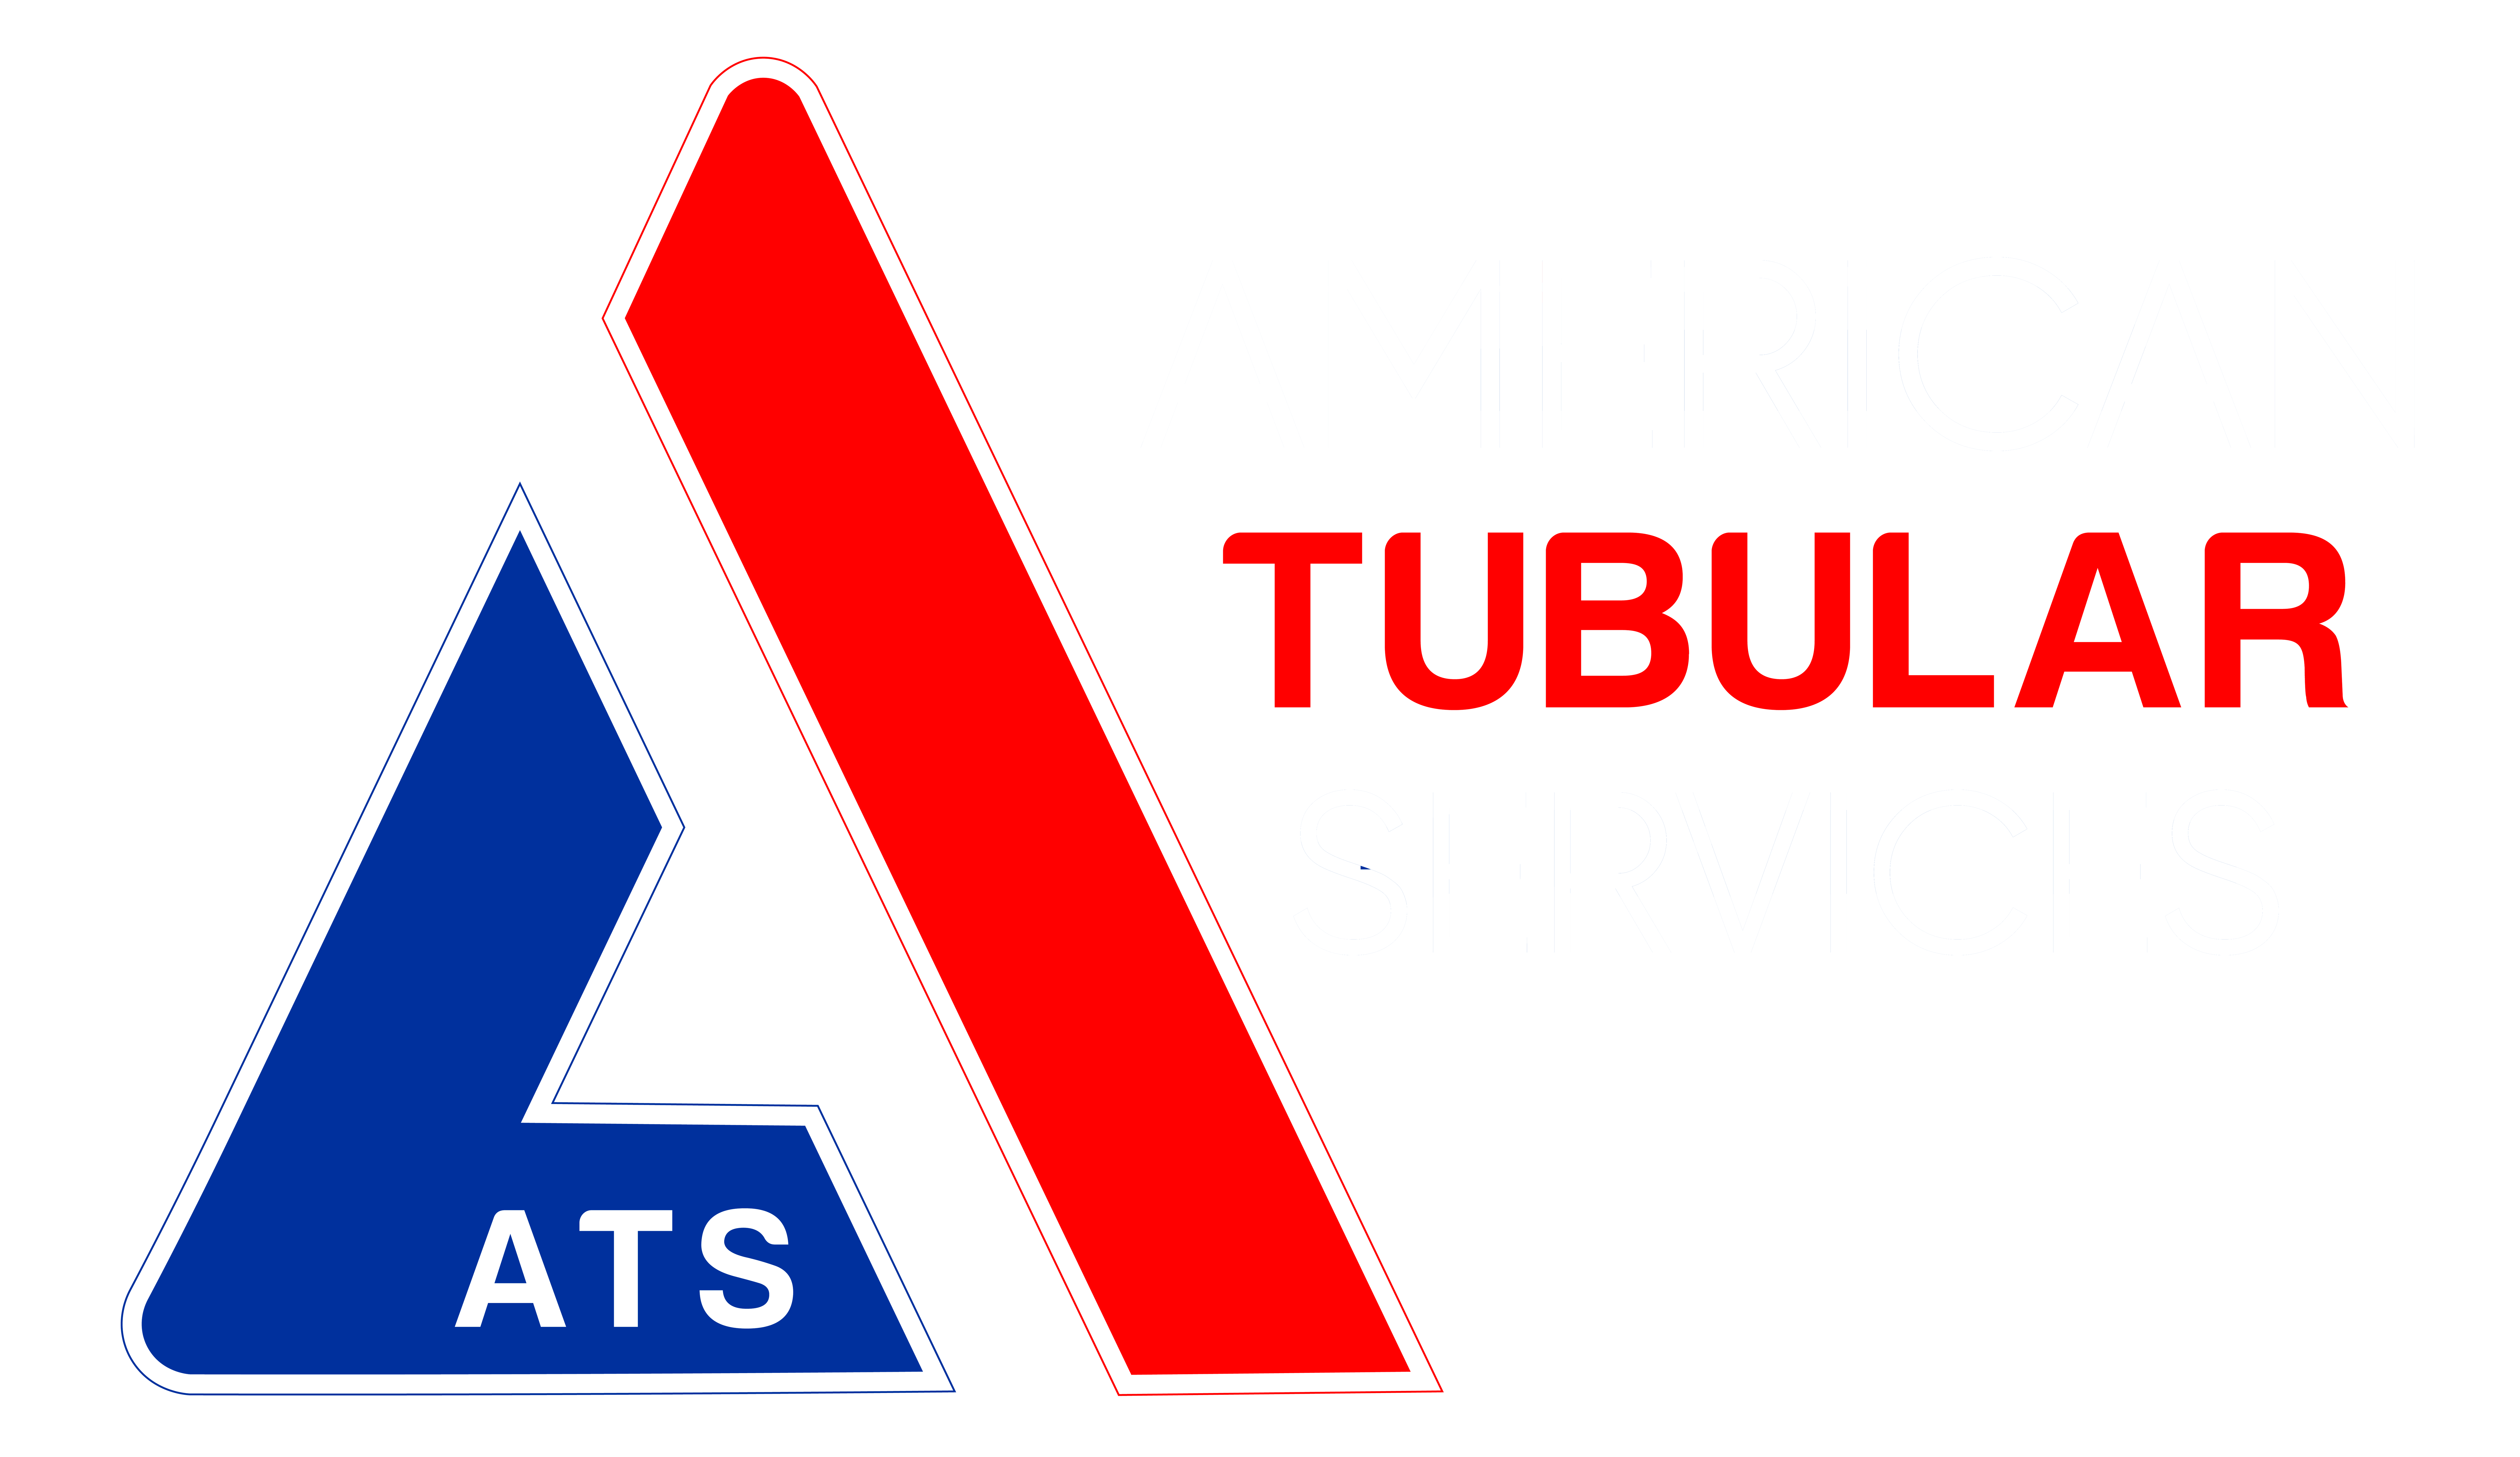 American Tubular Services